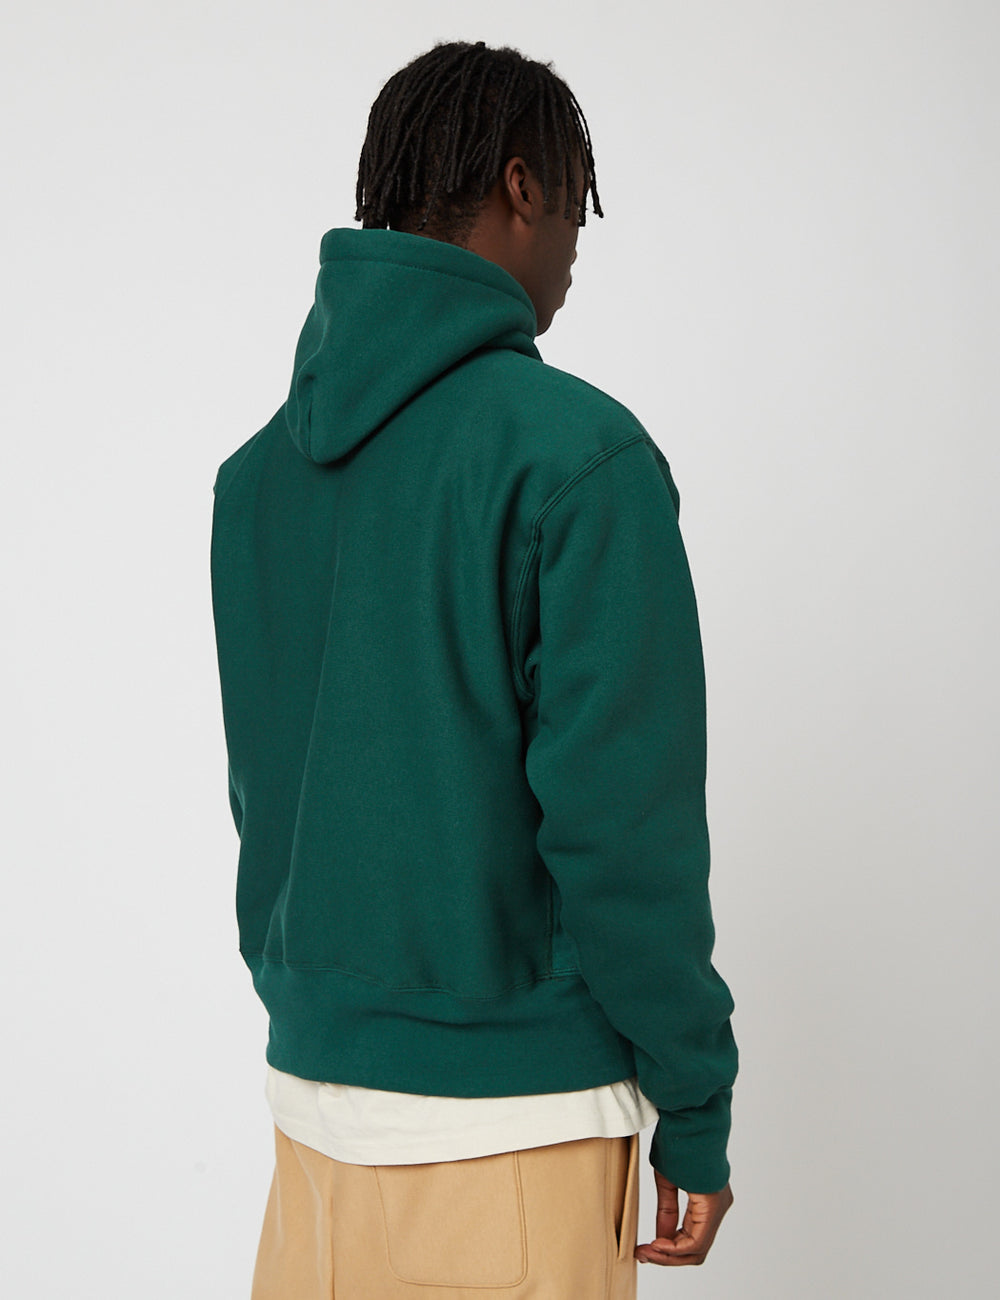 Camber USA 12oz Pullover Hooded Sweatshirt - Dark Green I